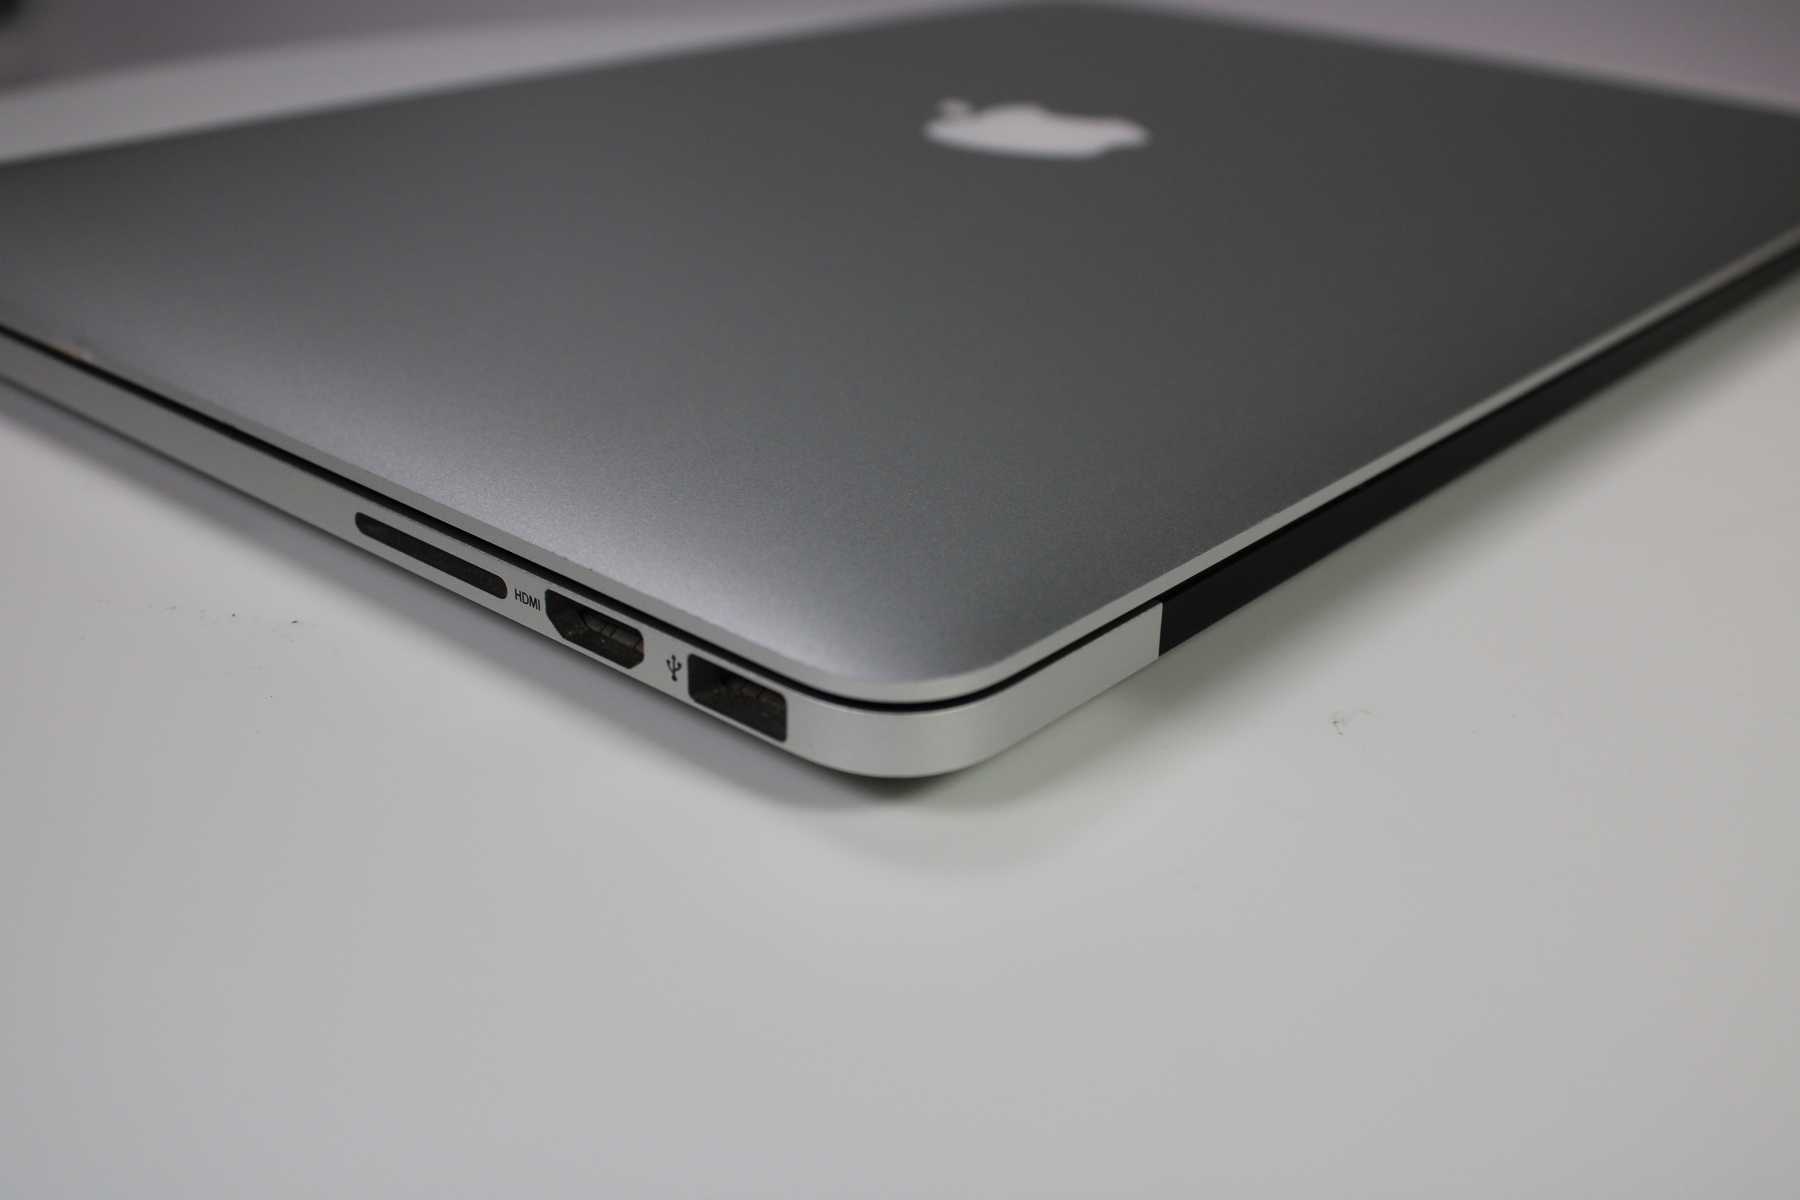 Apple MacBook Pro 15-inch 2015 2.2GHz Core i7 16GB RAM Integrated GPU (Wear & Tear Special)